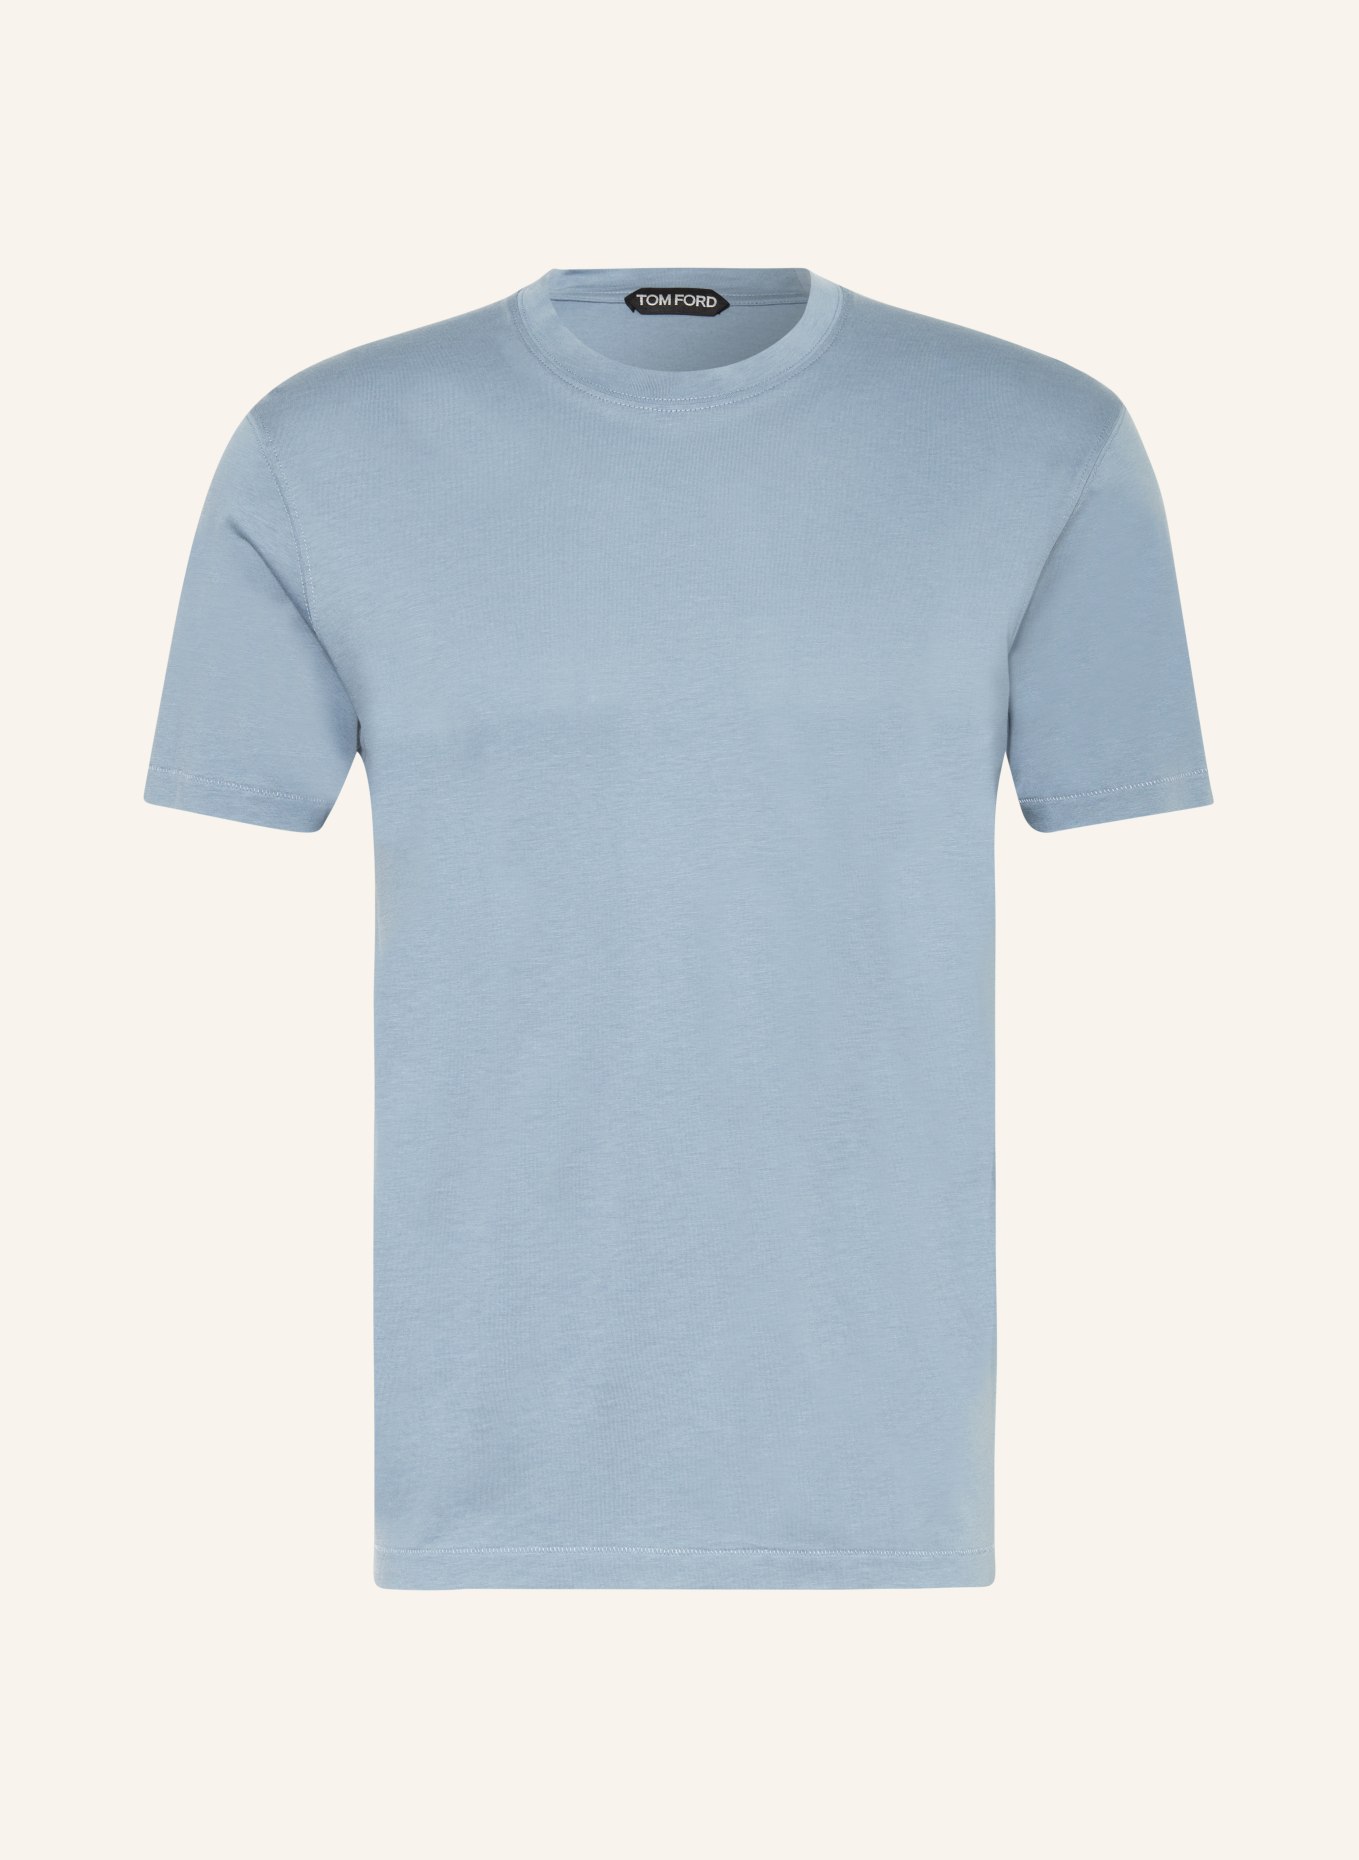 TOM FORD T-Shirt, Farbe: BLAU (Bild 1)